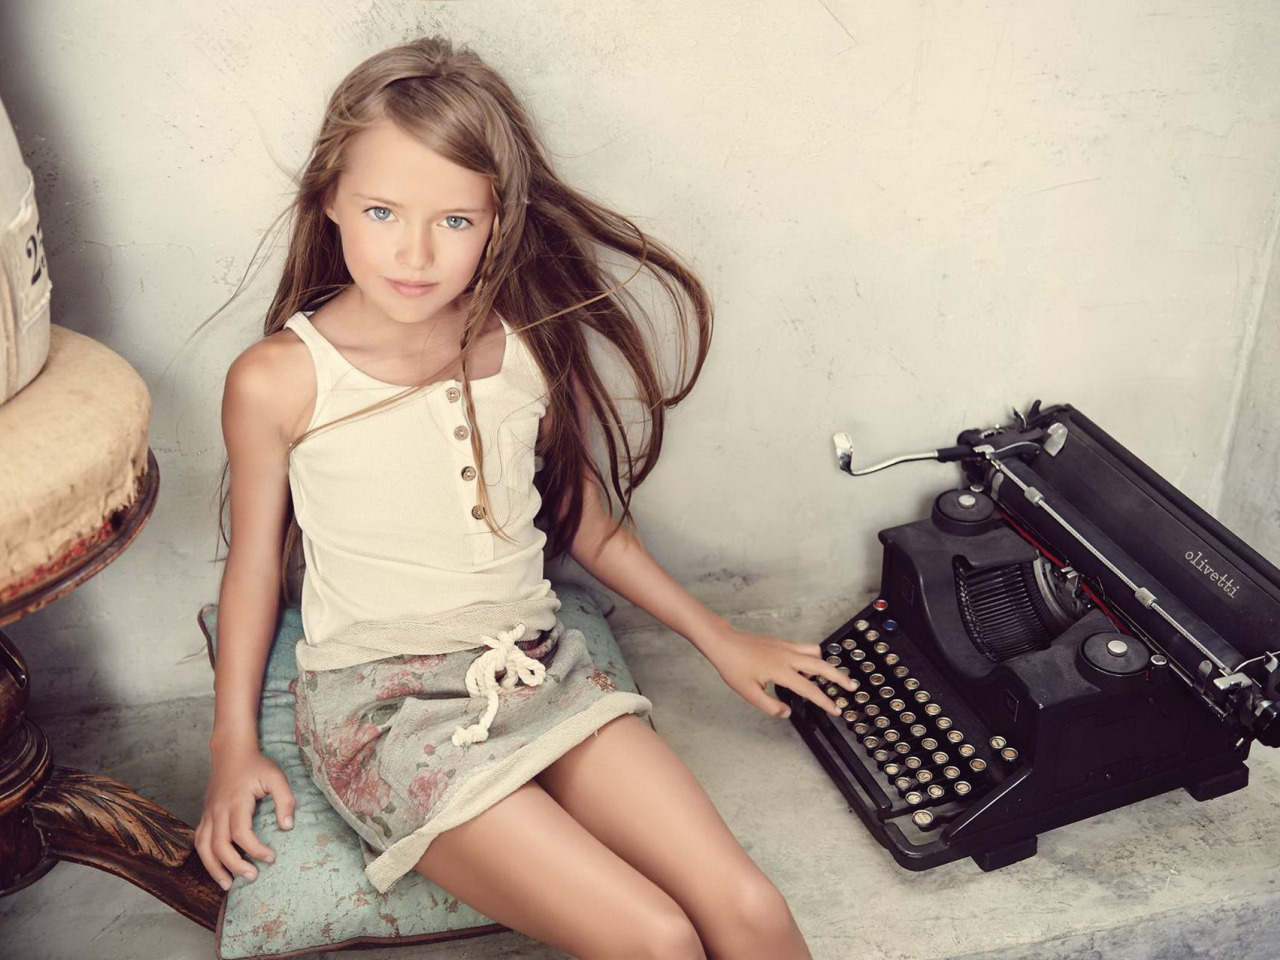 GoodFon.com - Free Wallpapers, download. look, girl, typewriter, Kristina P...